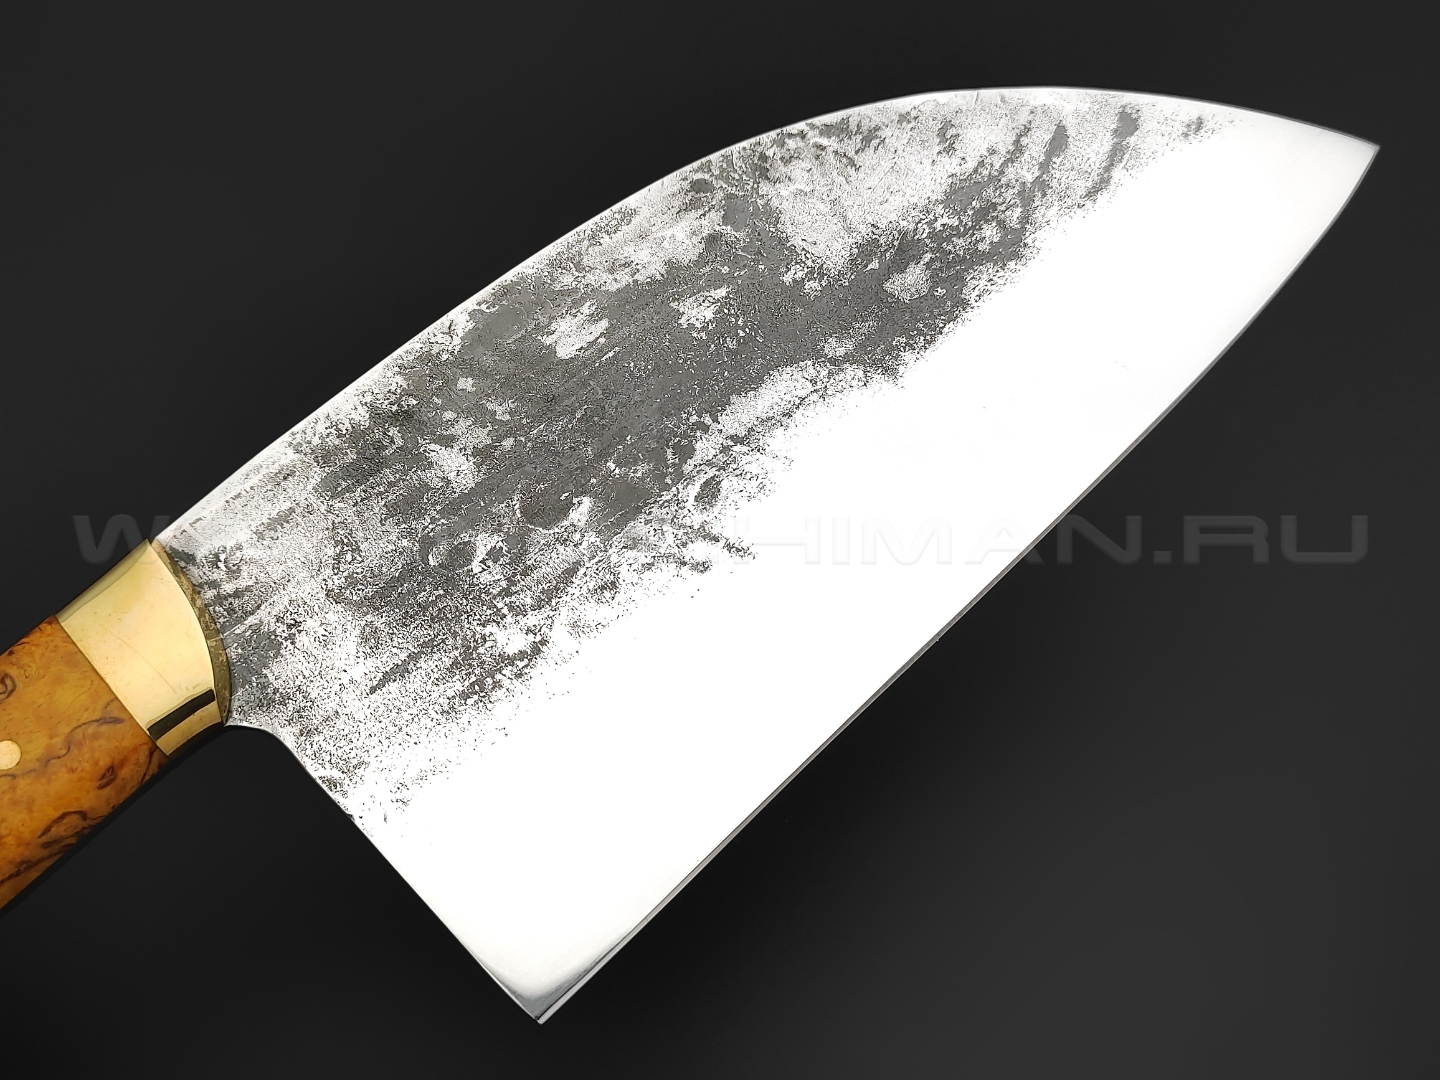 Товарищество Завьялова нож Сербский Шеф сталь K340, рукоять Стаб. дерево желтое, латунь